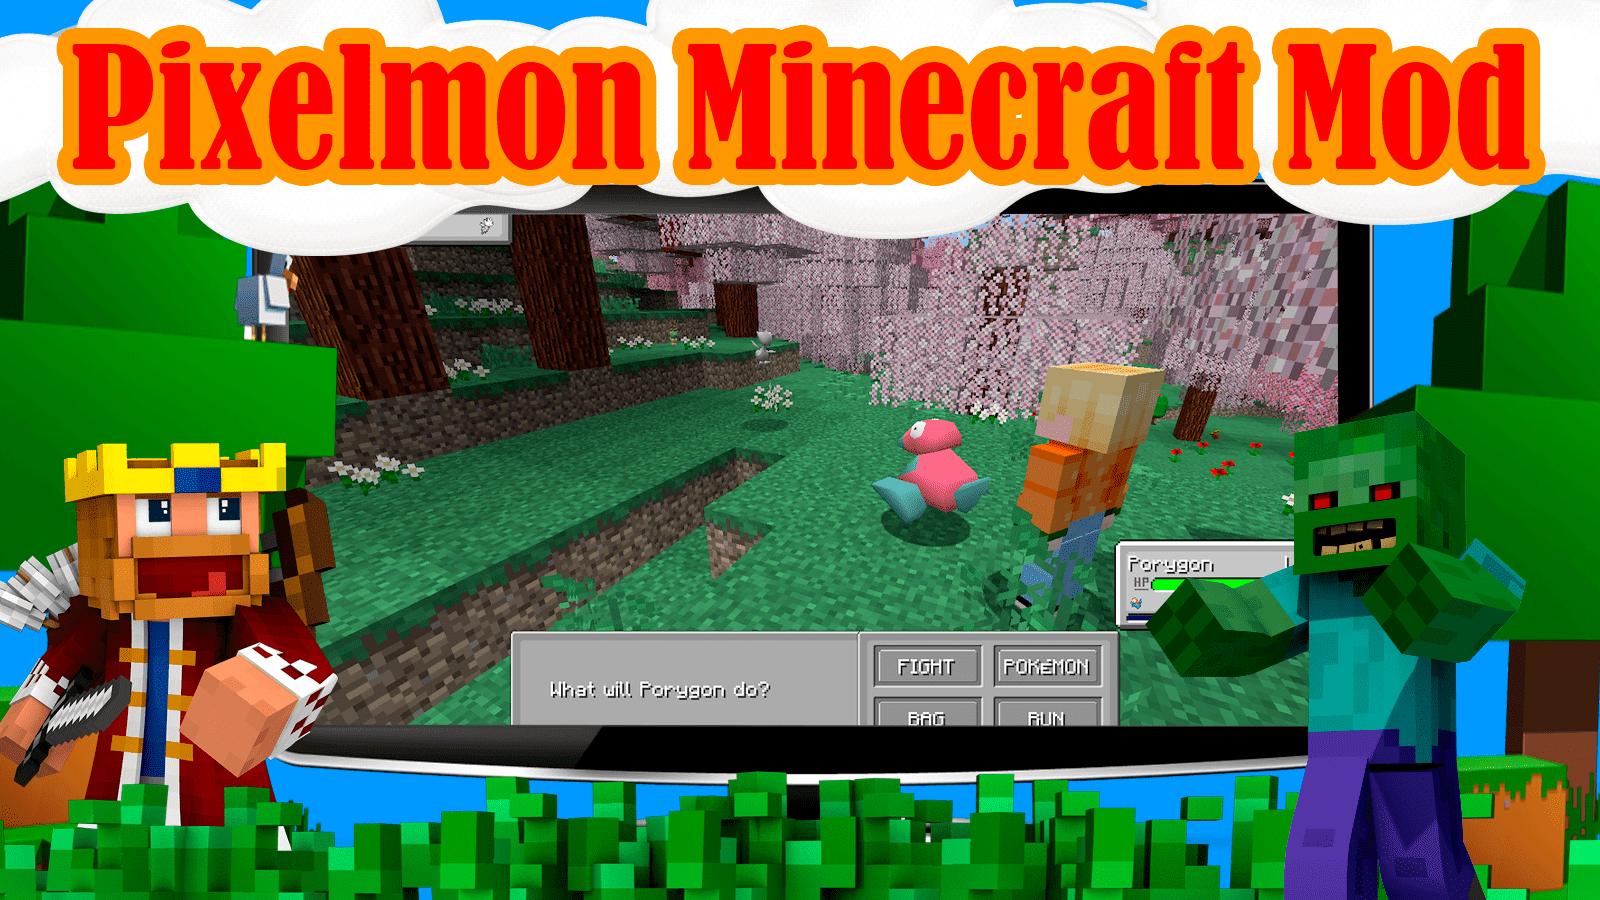 Baixe Pixelmon Mod for Minecraft no PC